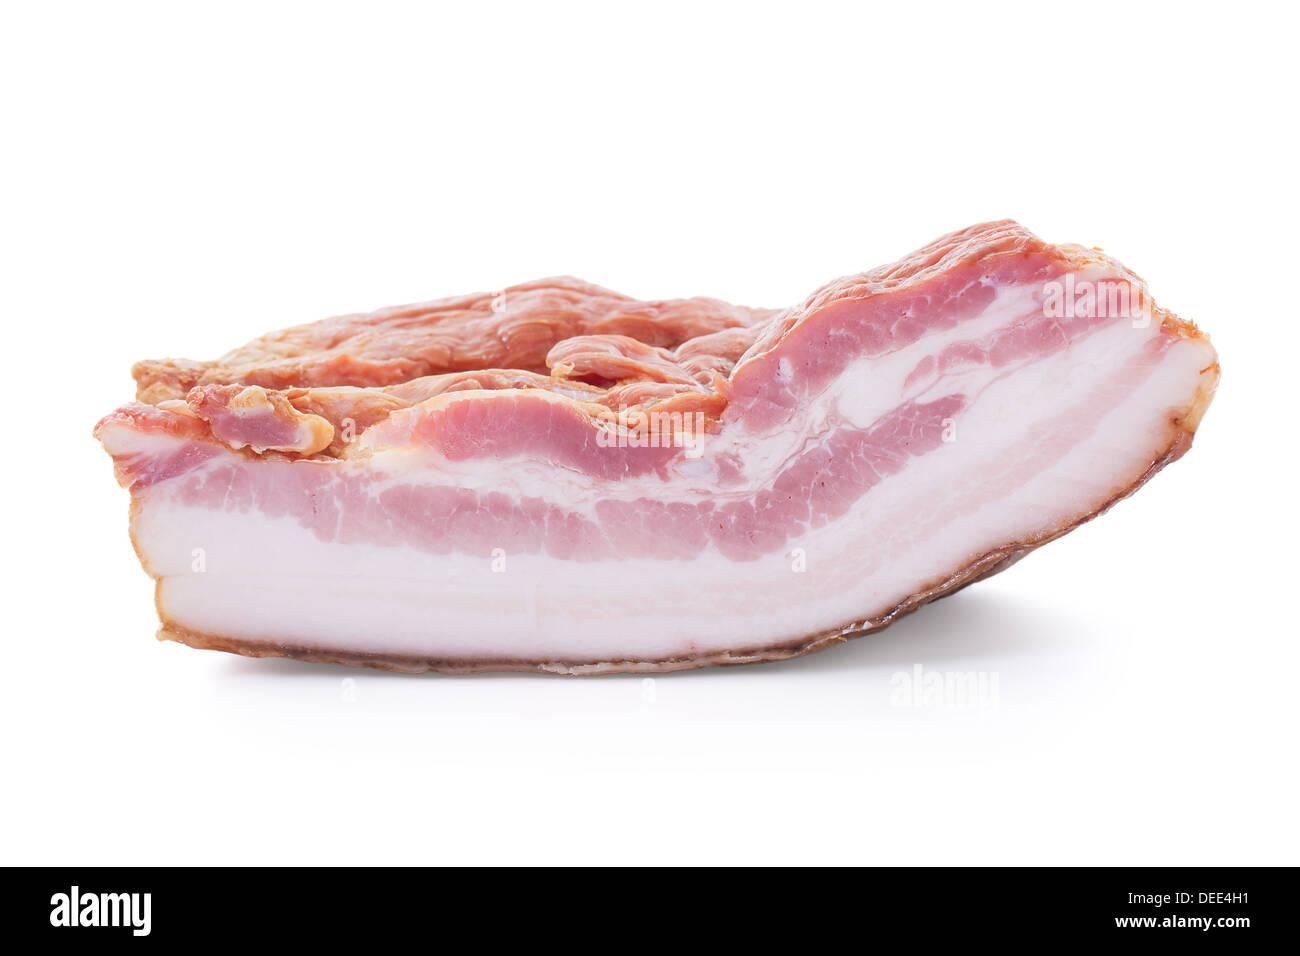 Smoked Bacon Slab Cut over white background, Shallow Focus, Horizontal shot Stock Photo